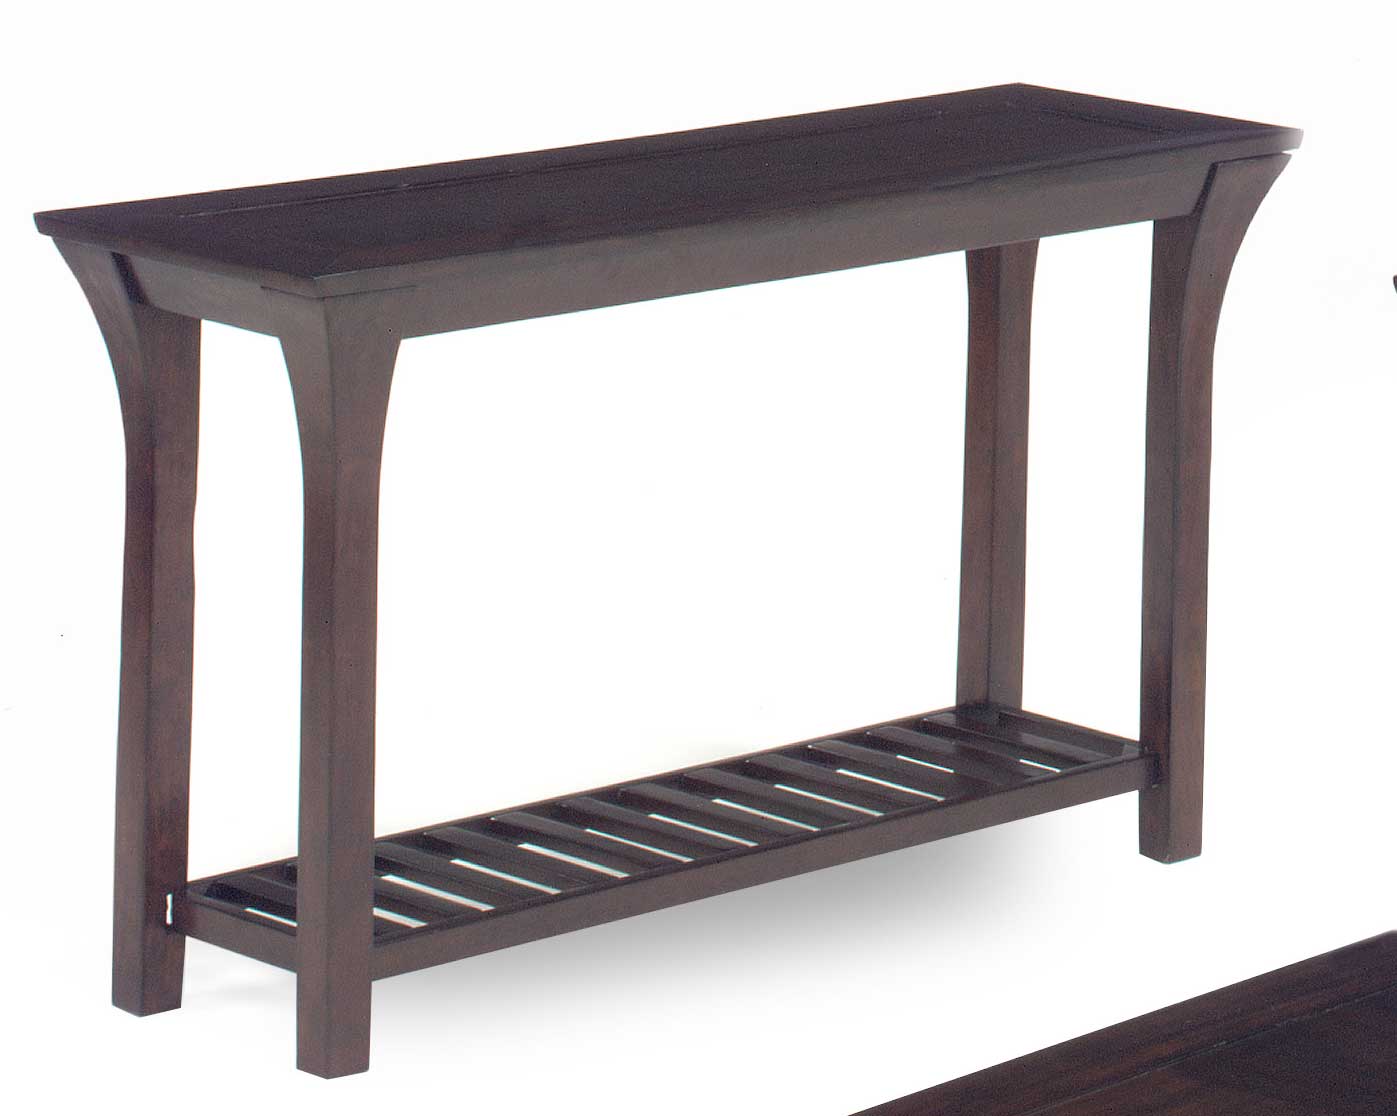 Jackson 813 Series Sofa Table - Merlot Wood with Slat Shelves